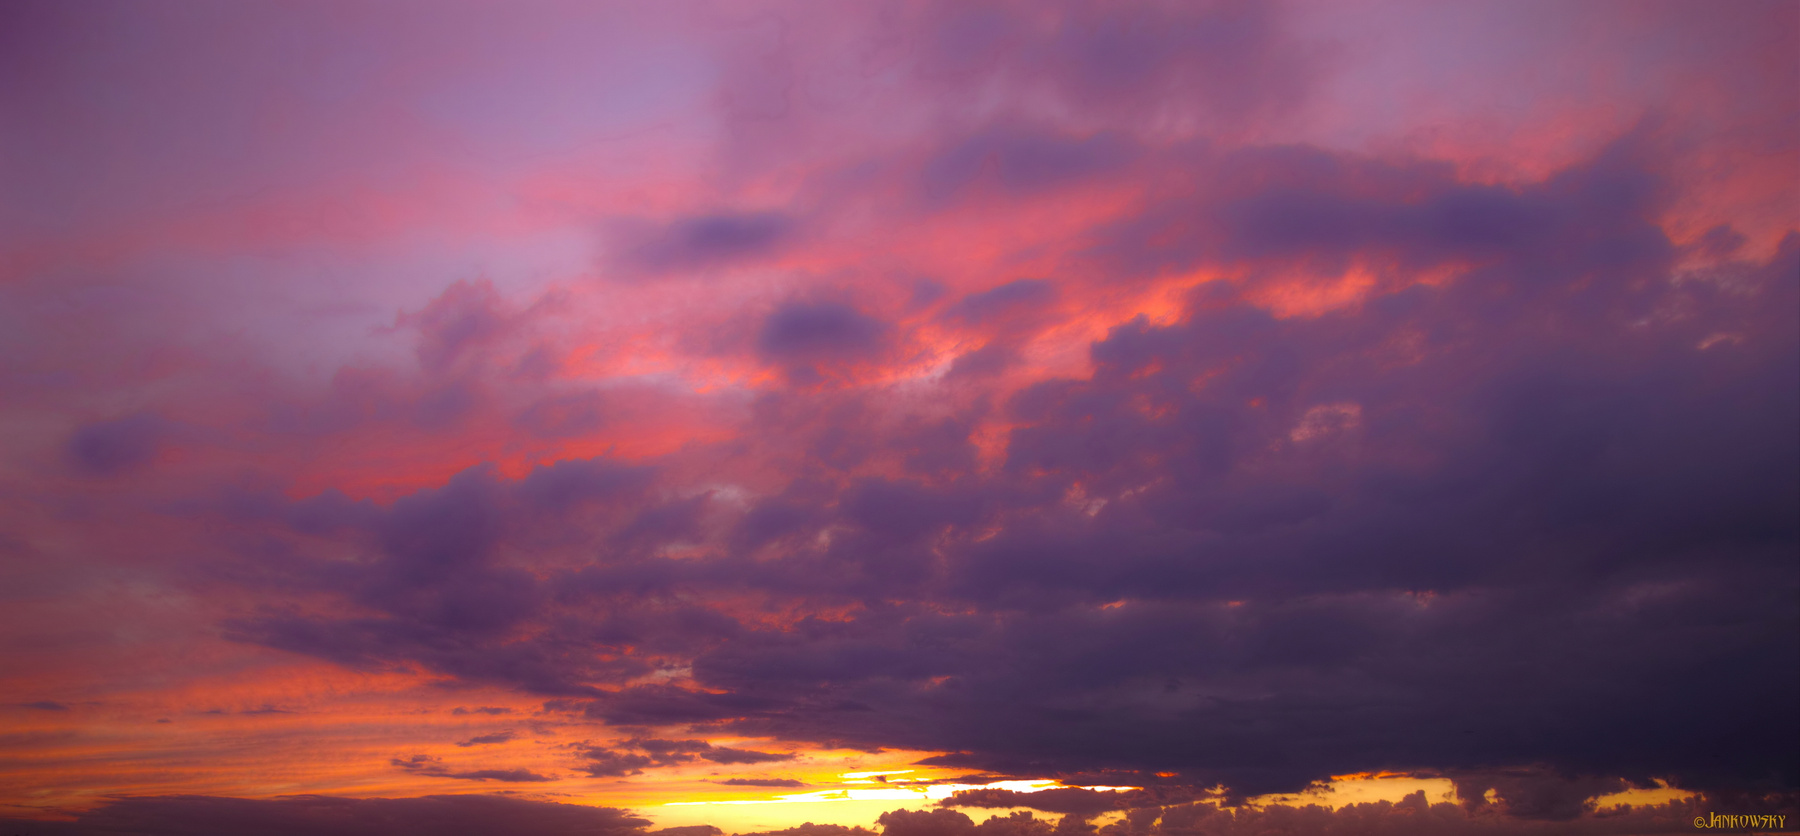 Foveon-безумия омского неба до отвисания челюсти Sigma SD1 Merrill Foveon панорама облаков закат омск розовый оранжевый